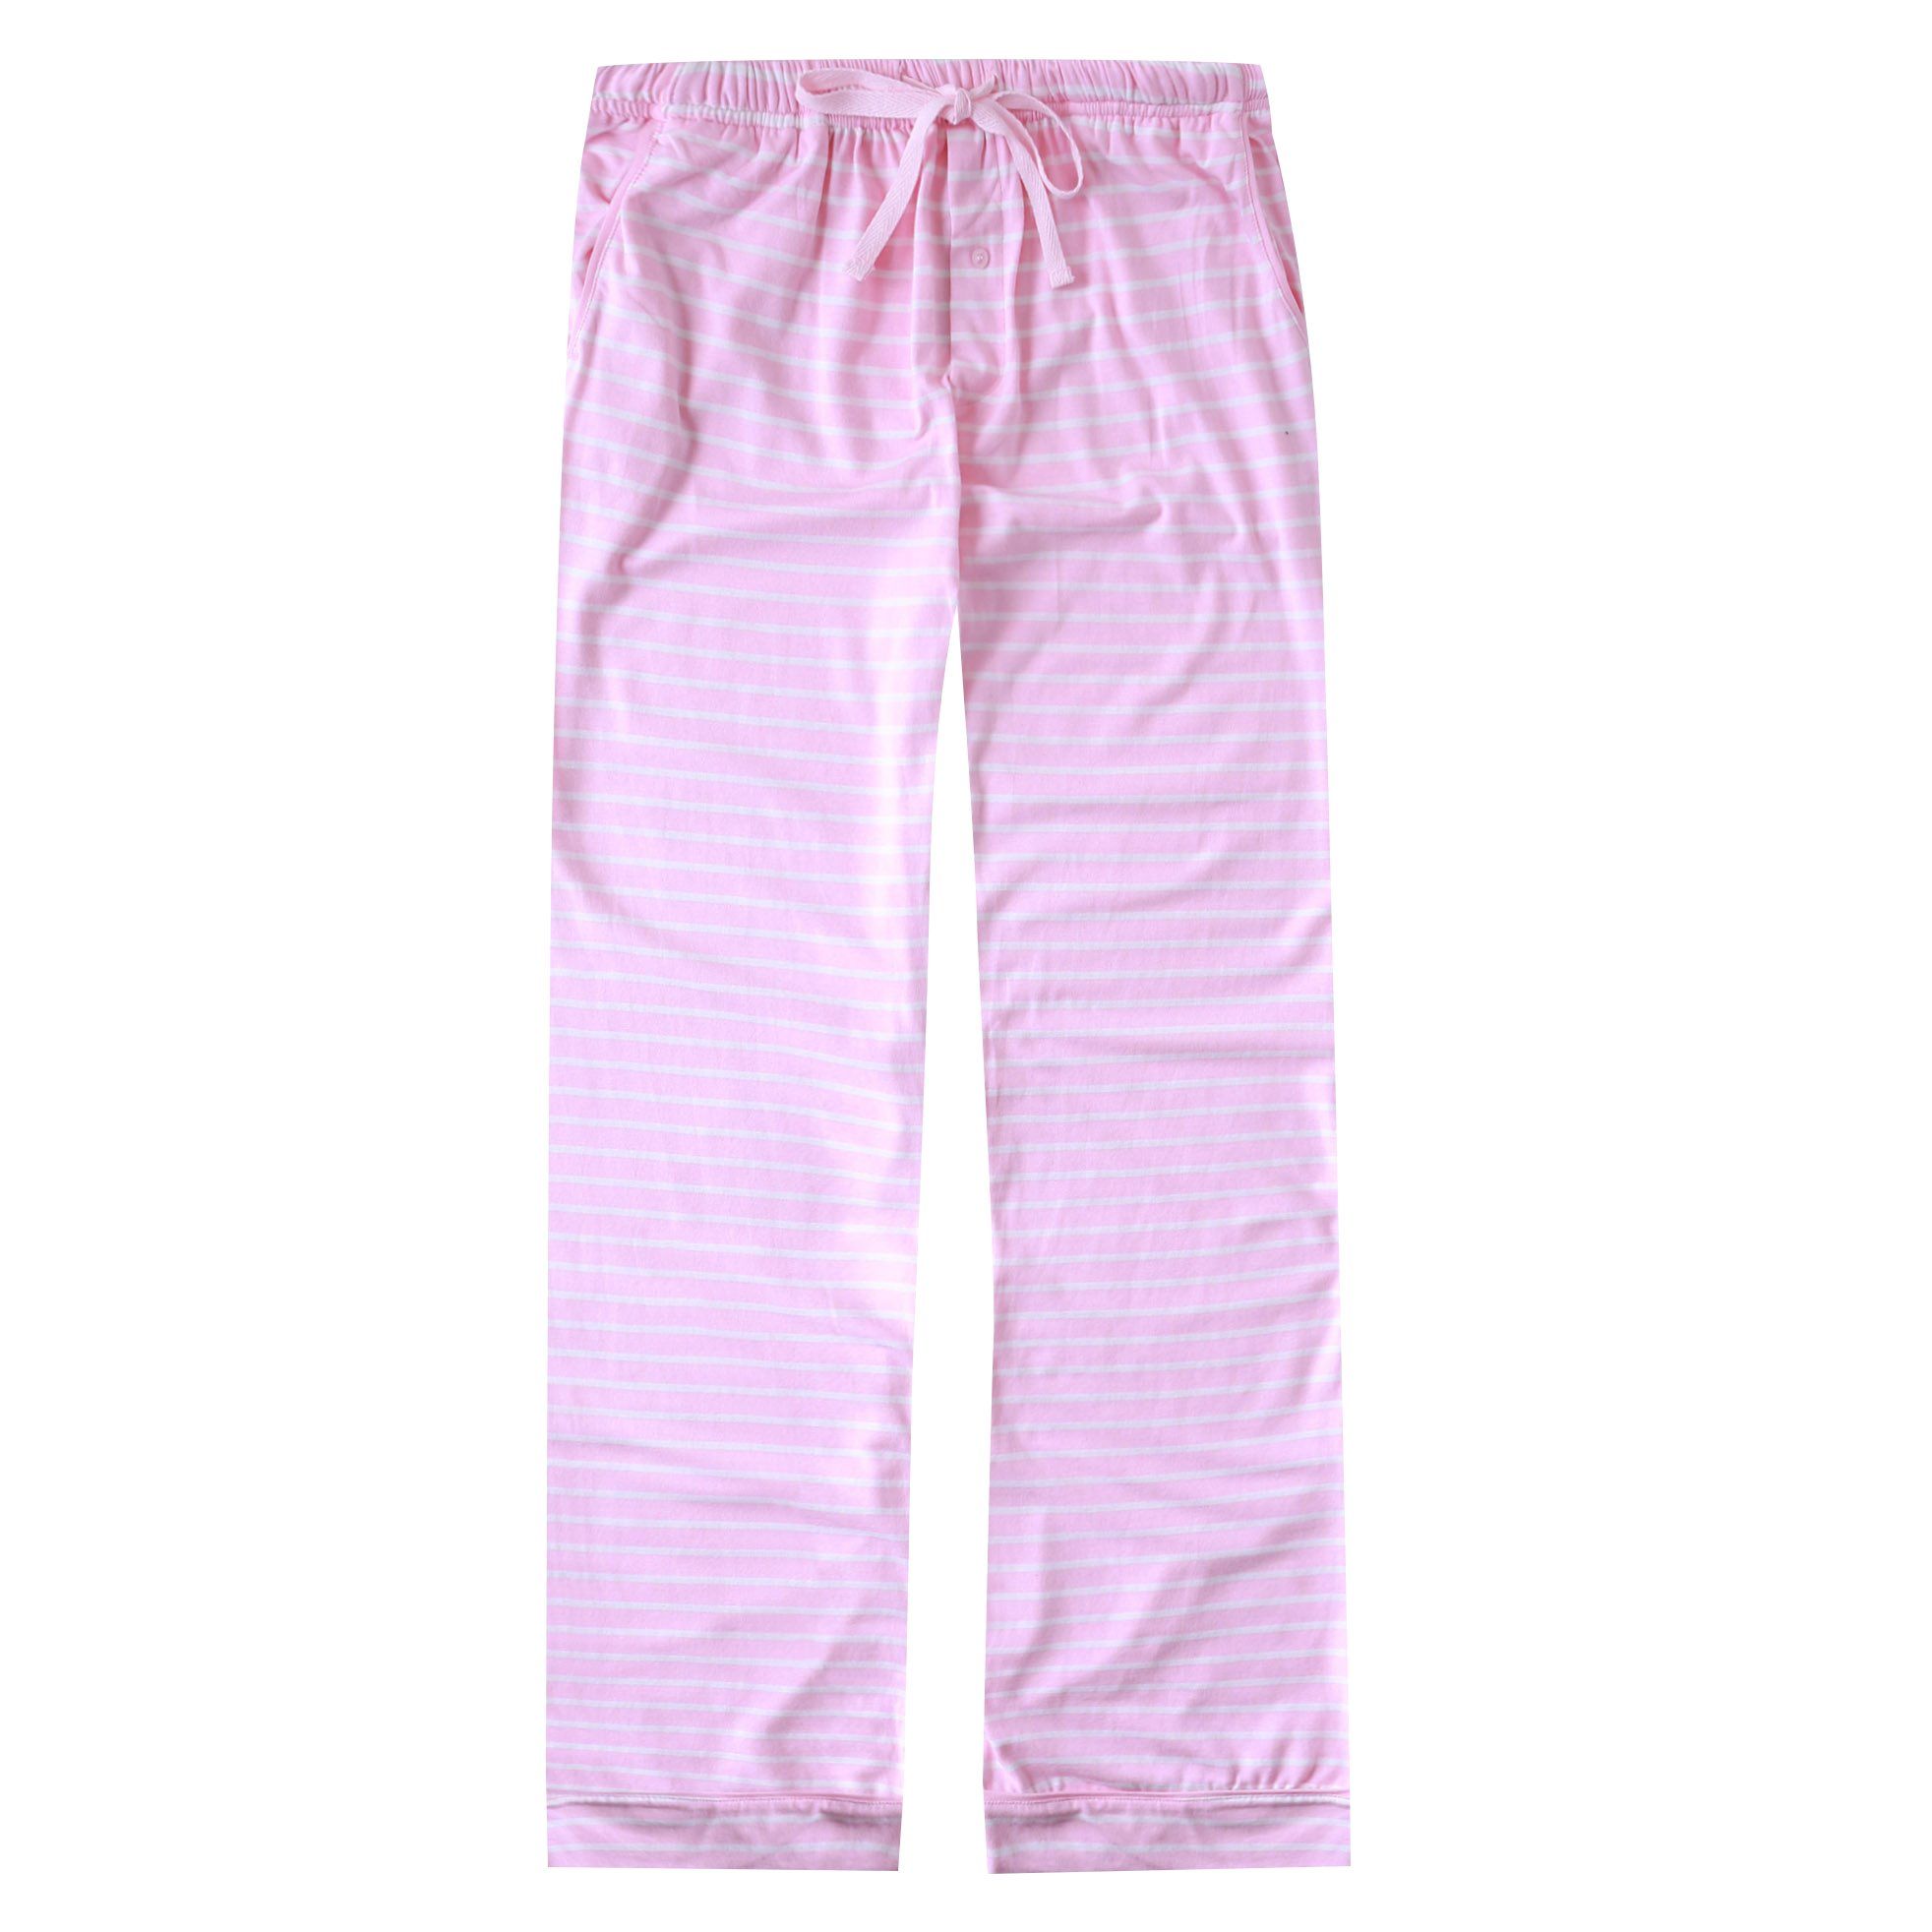 Women's Soft Knit Jersey Lounge Pants